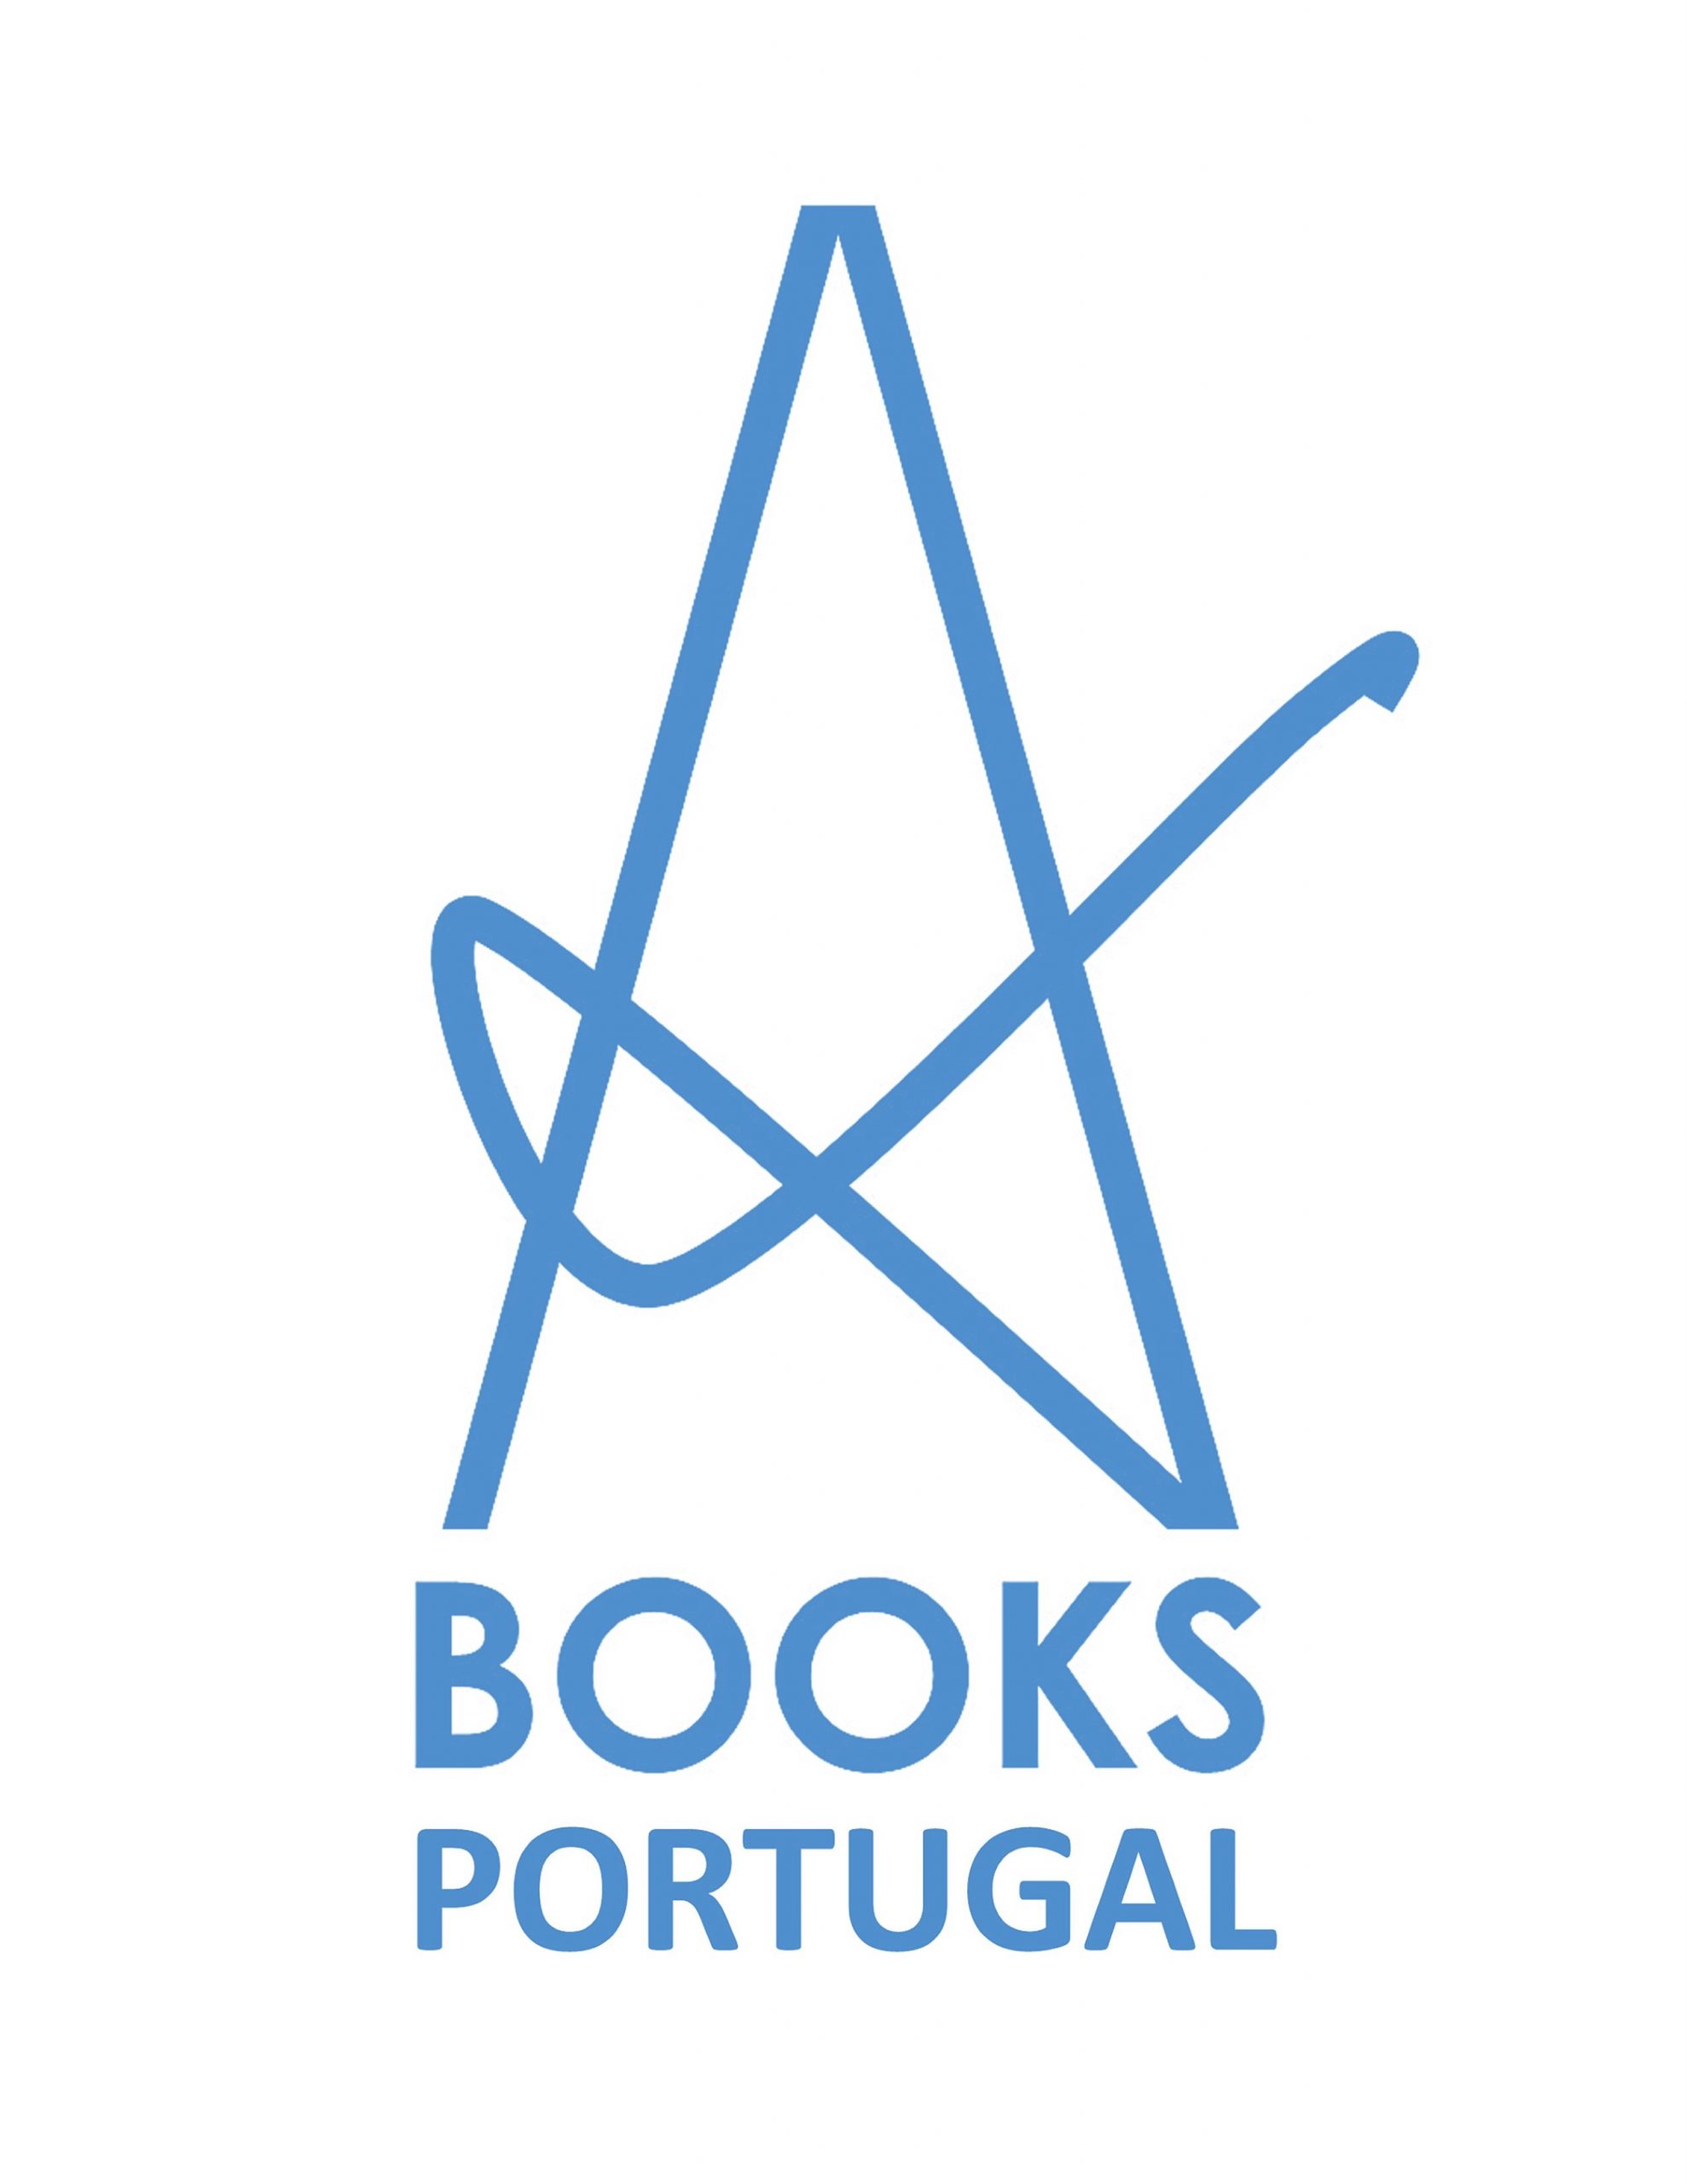 Adelaide Books Portugal